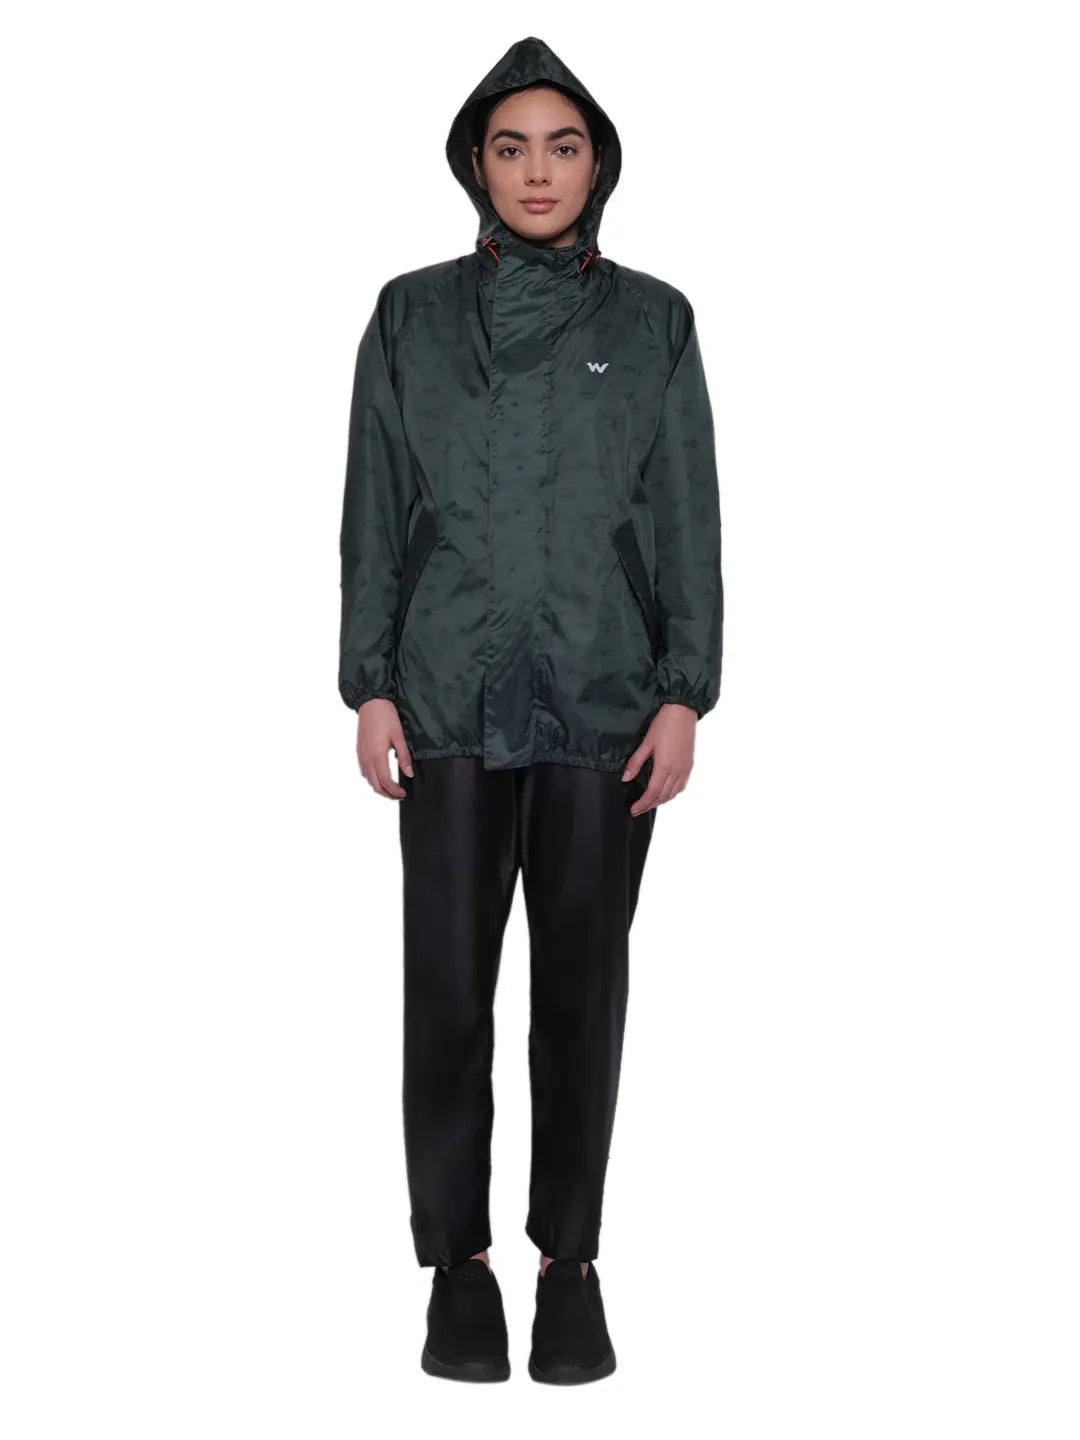 Women HYPADRY™ Printed Rain Jacket Suit